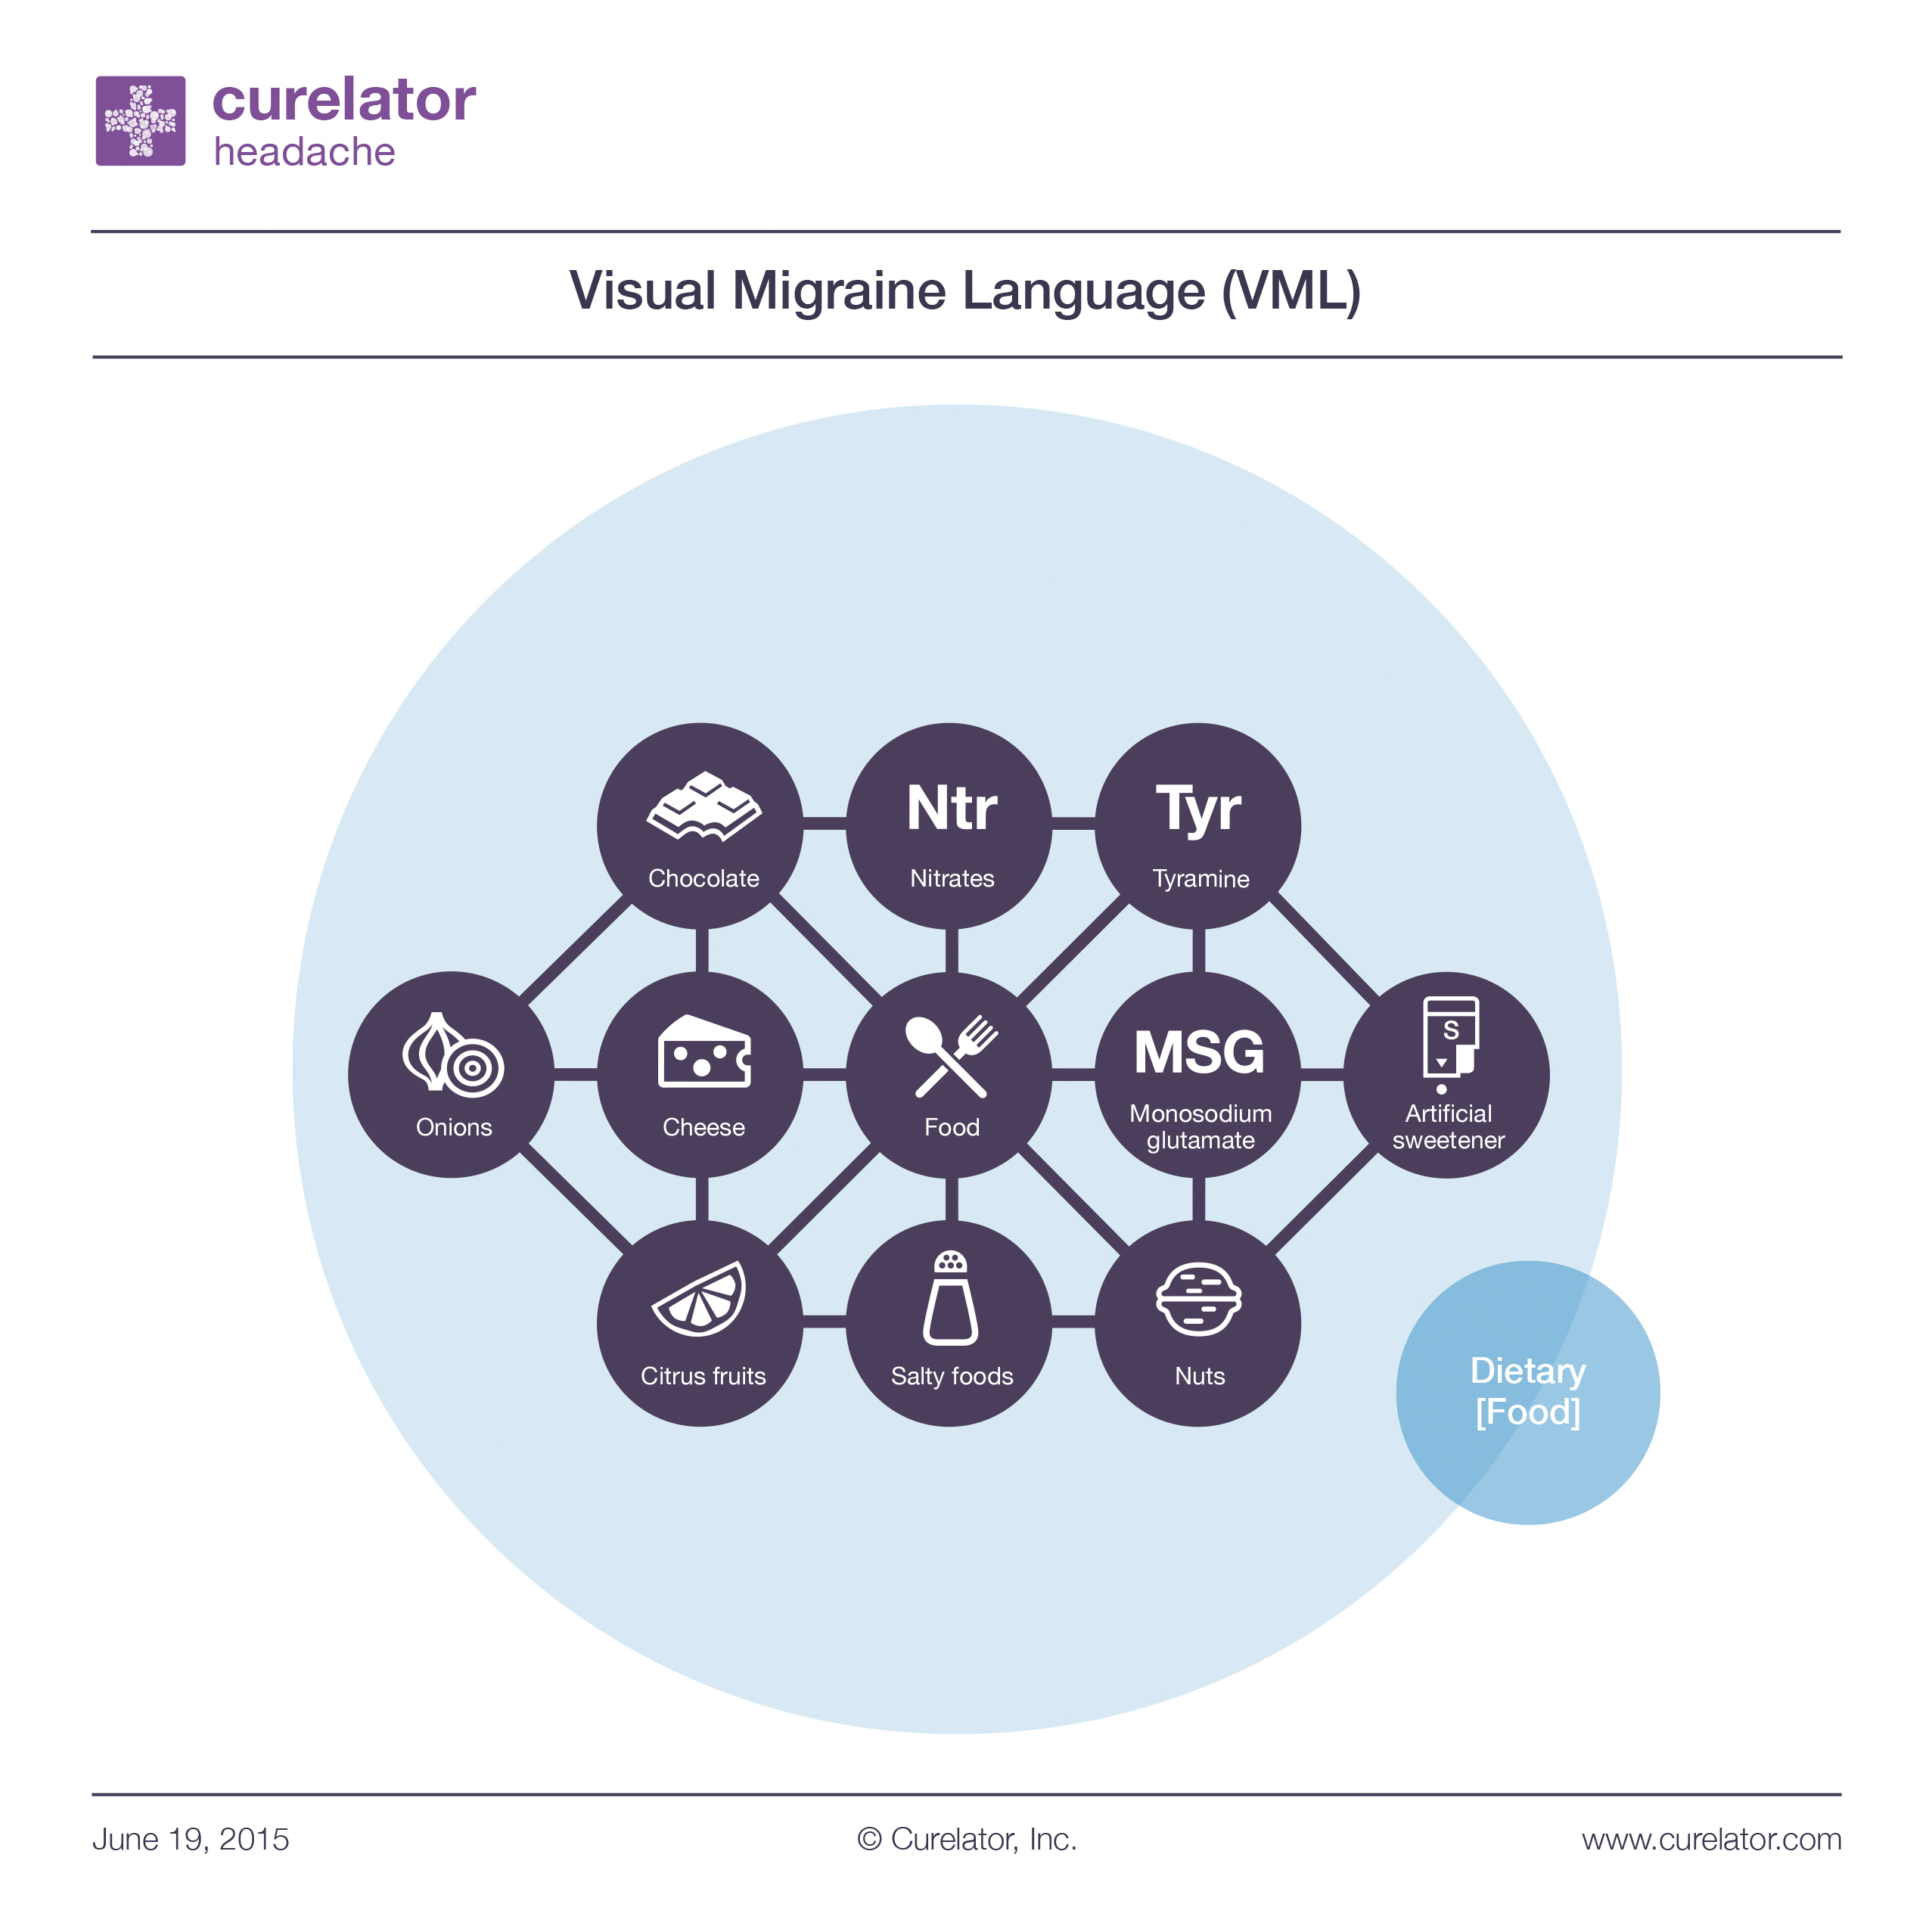 Curelator Headache developed the Visual Migraine Language (VML) to facilitate daily data entry.